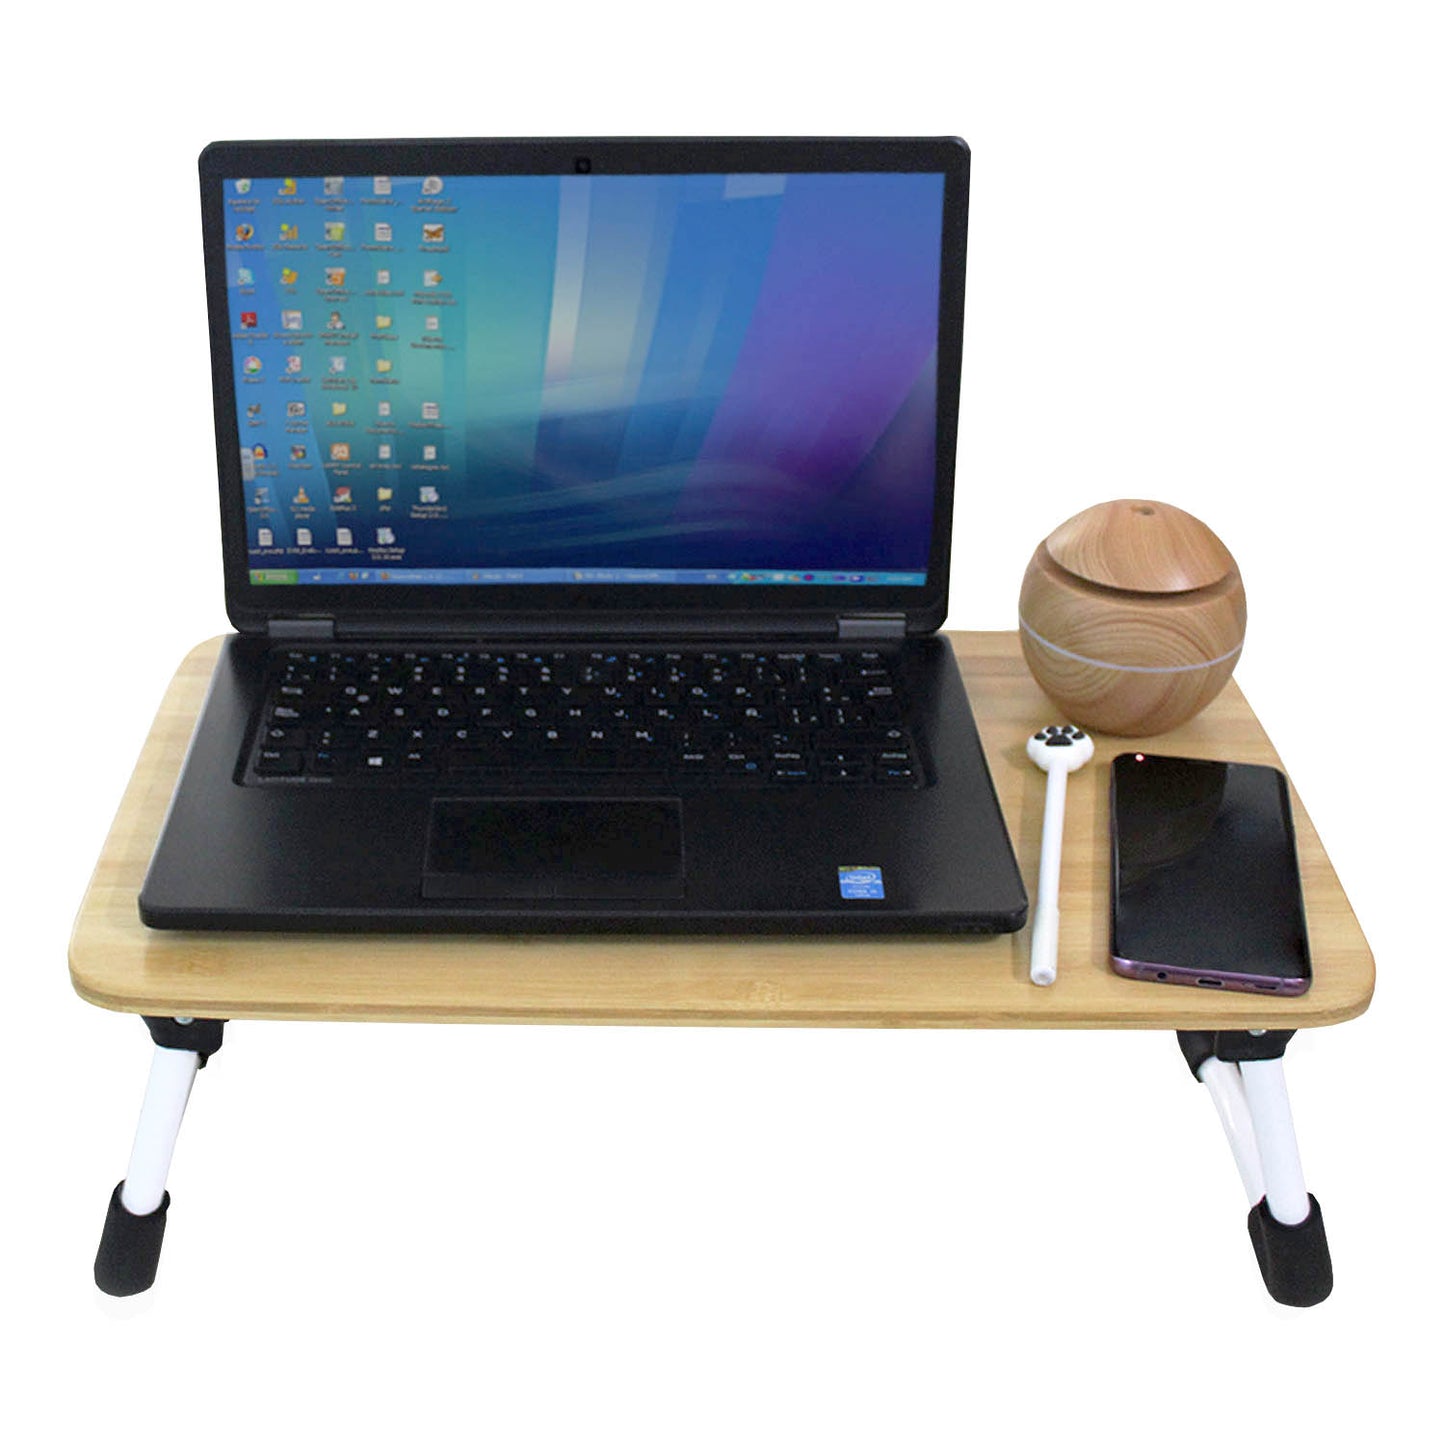 Mesa Soporte Para Laptop De Bambú, Resistente Mesa Cama Mediana